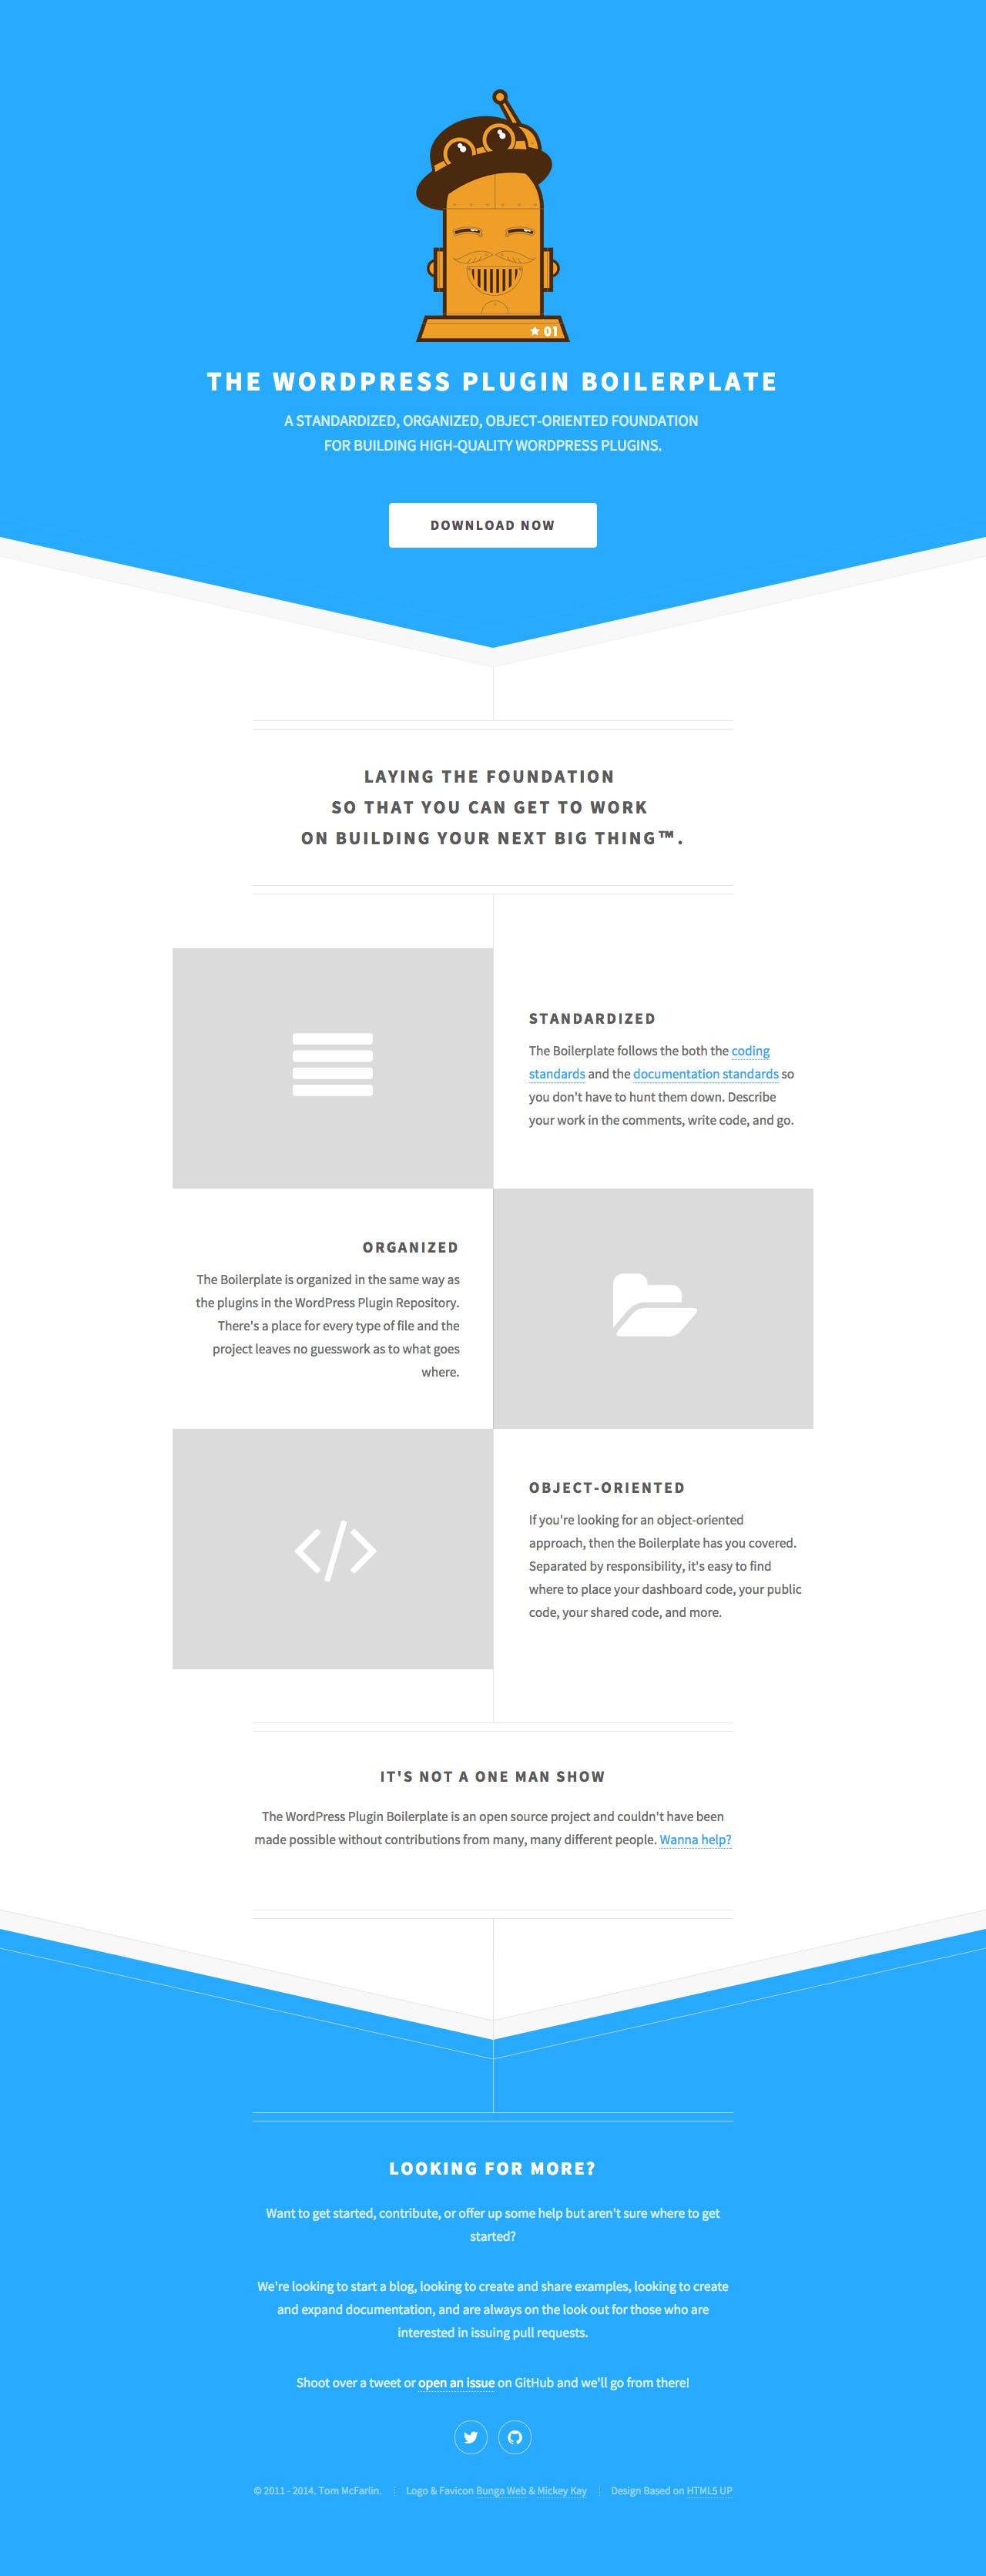 The WordPress Plugin Boilerplate Website Screenshot